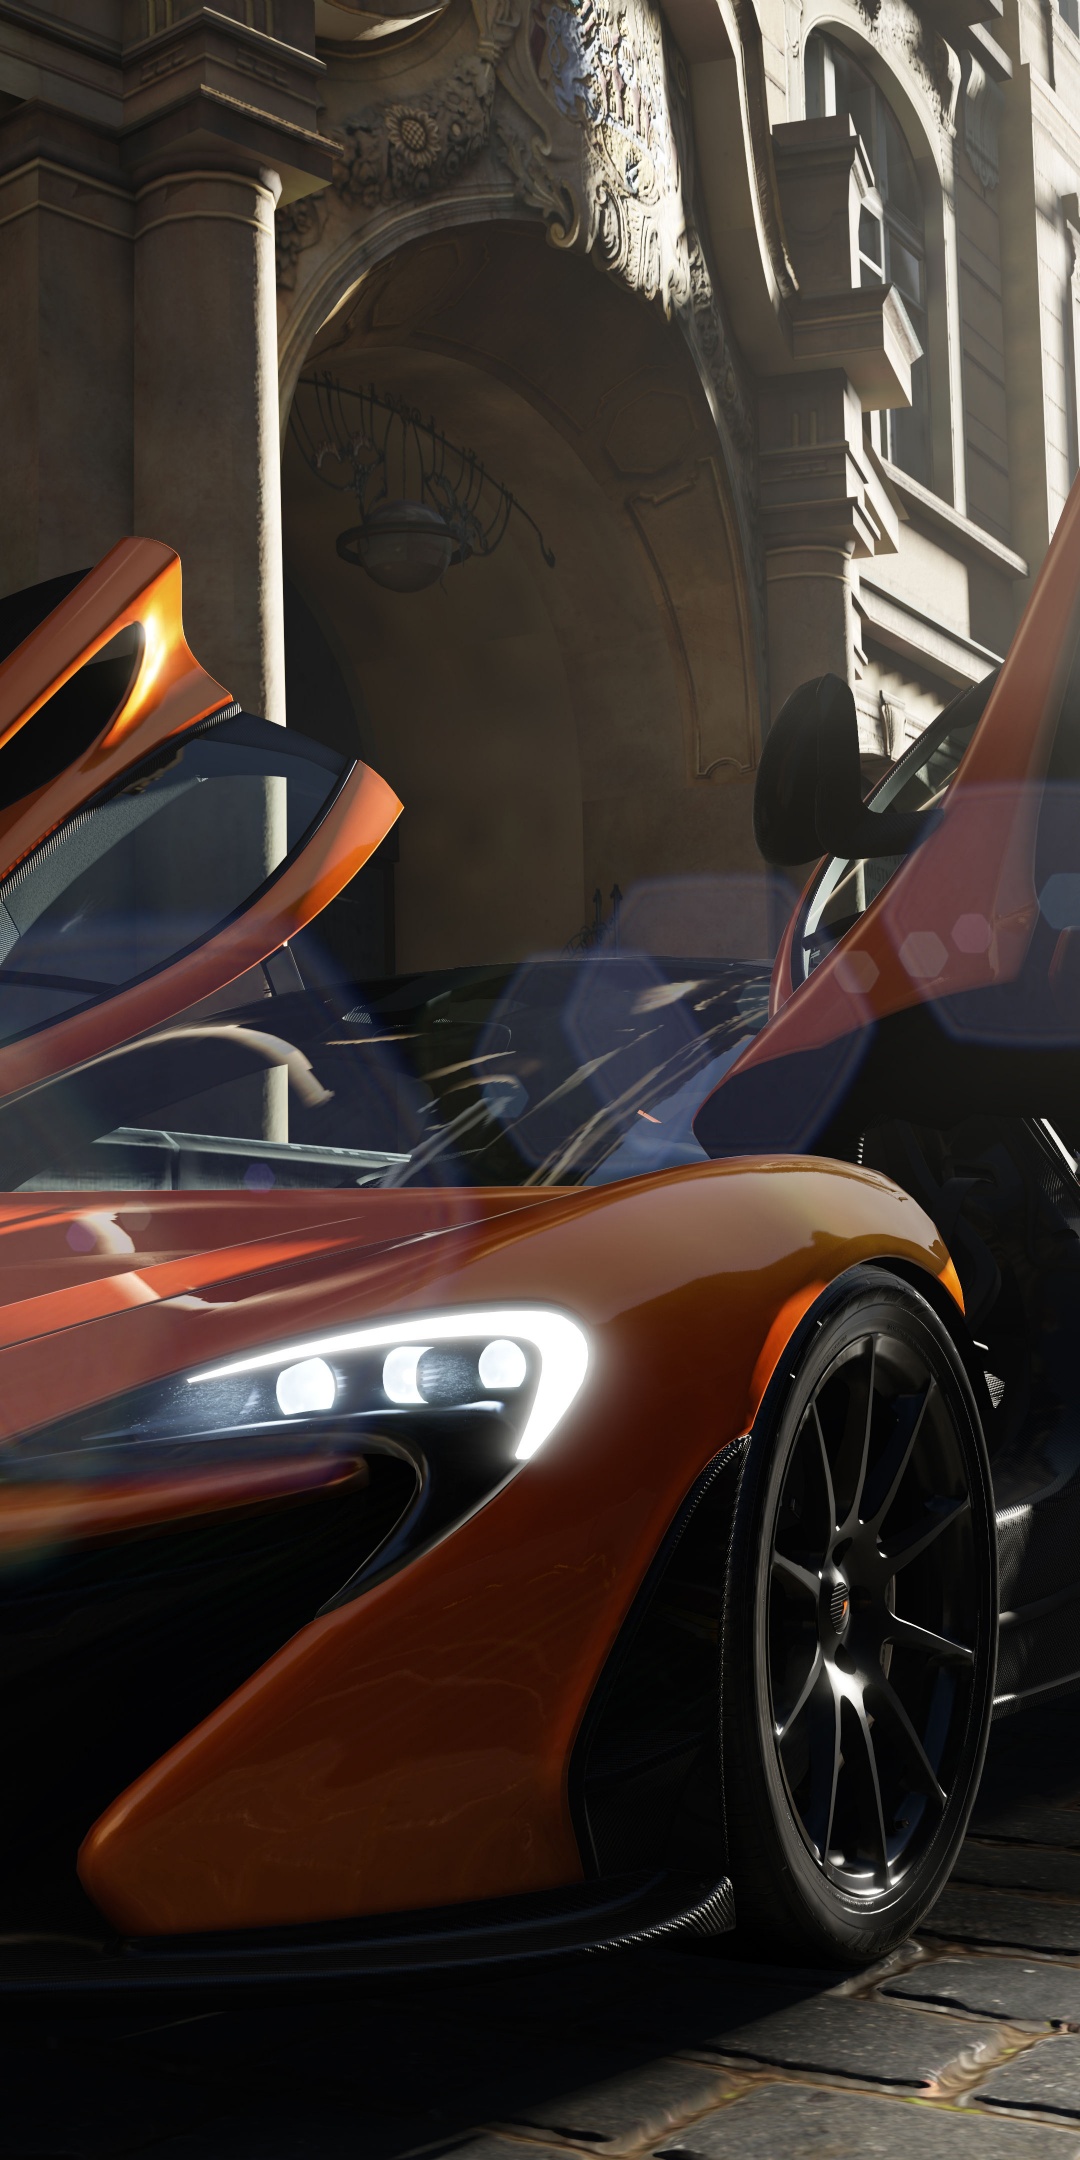 Xbox One Game - Forza Motorsport 5